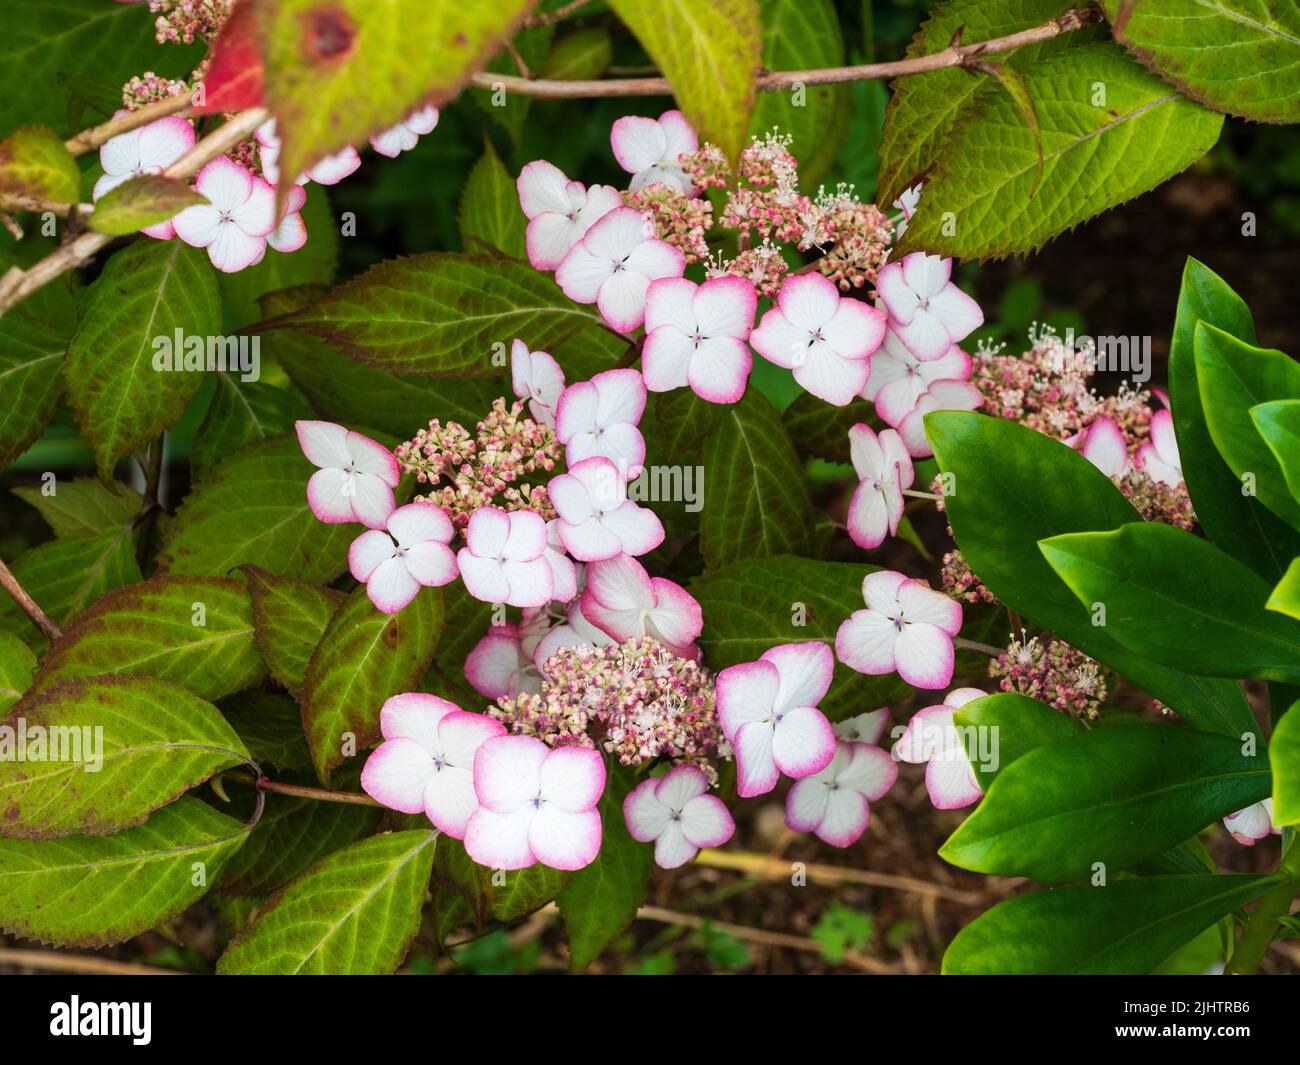 Pink picotee white lacecap flowers of the hardy mountain hydrangea shrub, Hydrangea serrata 'Kiyosumi' Stock Photo